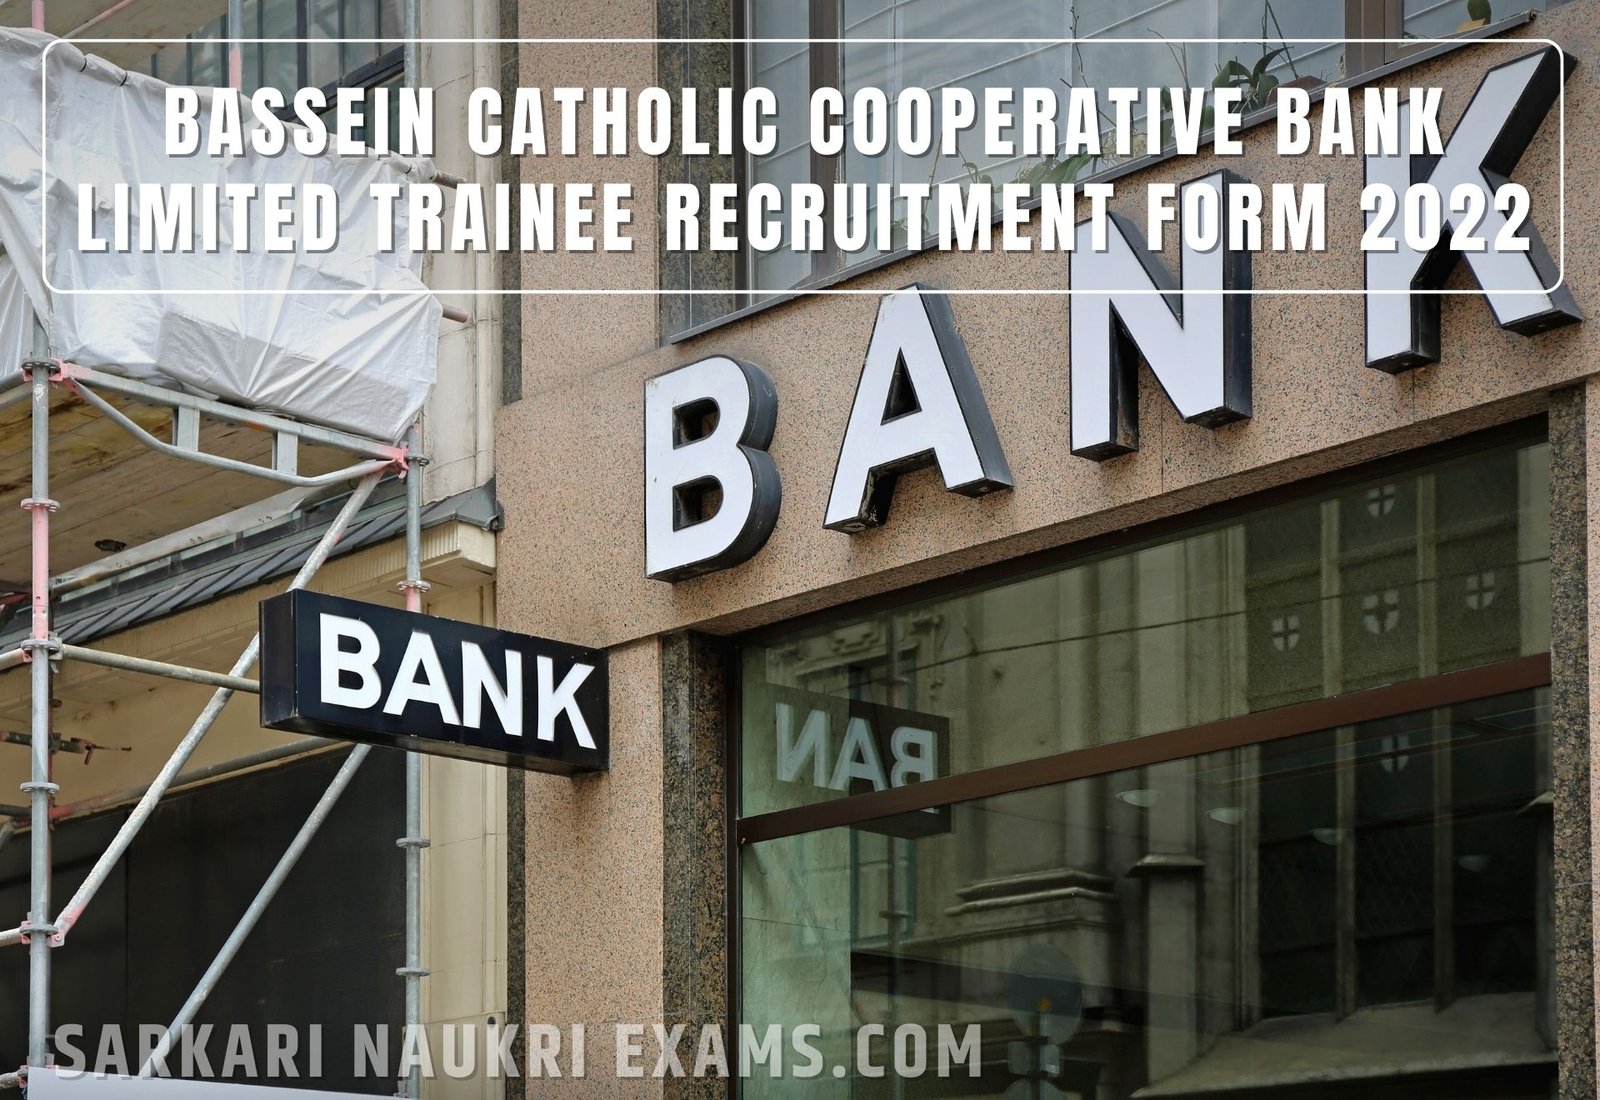 Bassein Catholic Cooperative Bank Limited Trainee Recruitment Form 2022 | Banking Job